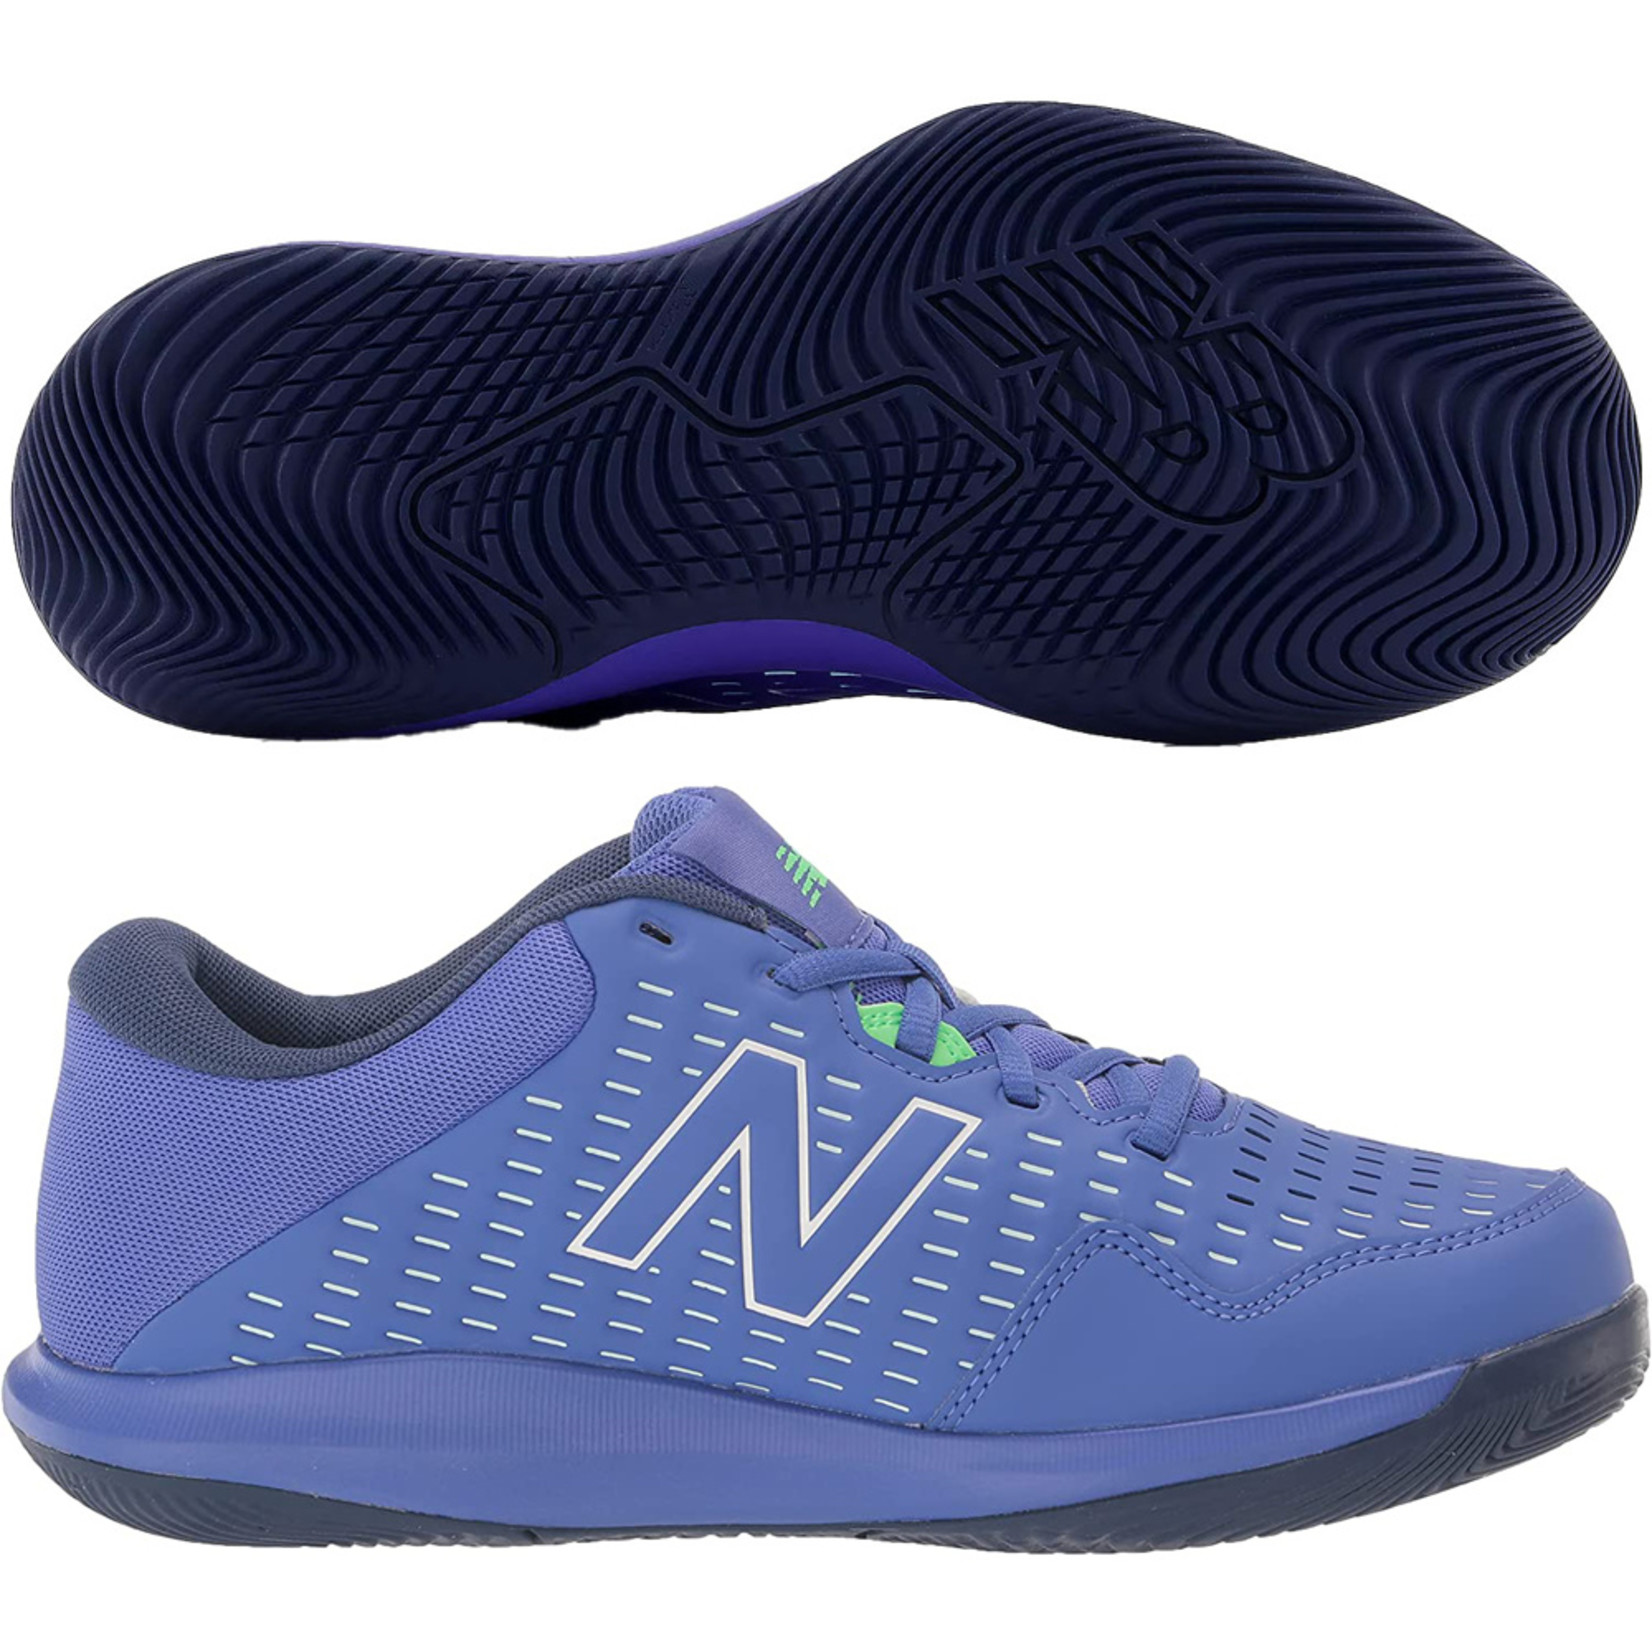 New Balance New Balance MCH696J4 696v4 Men's Tennis Shoes